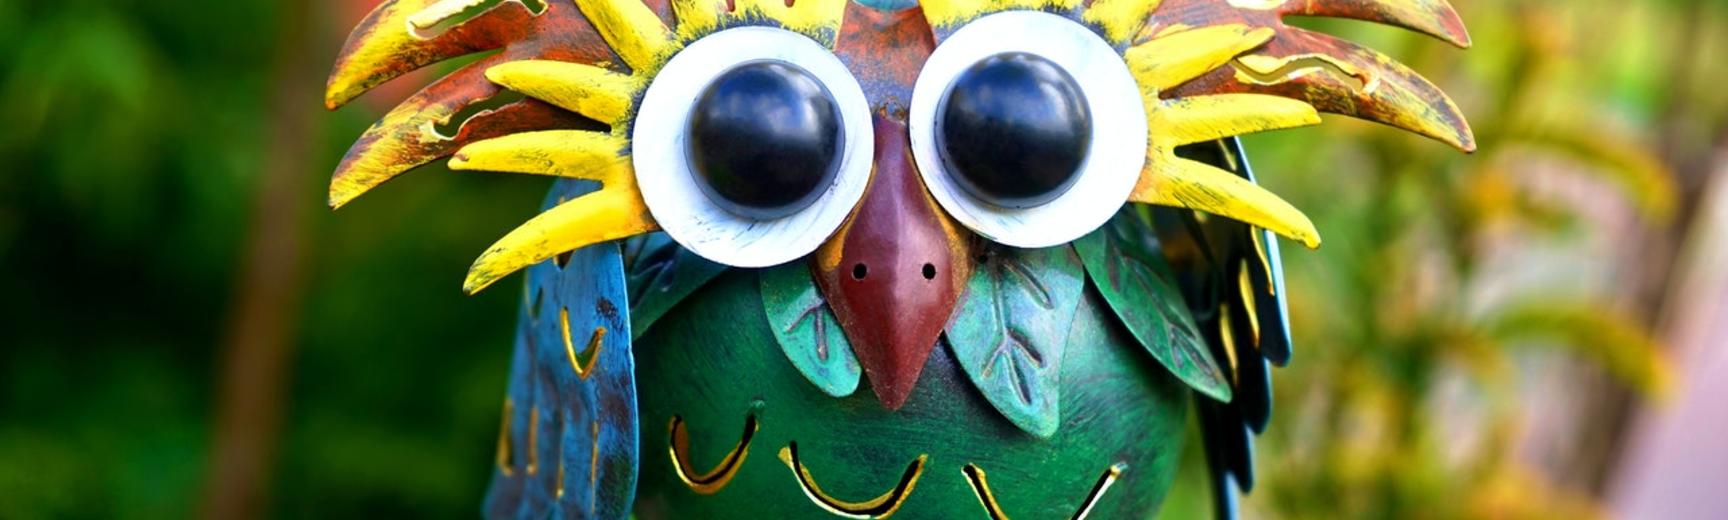 colourful metal owl ornament